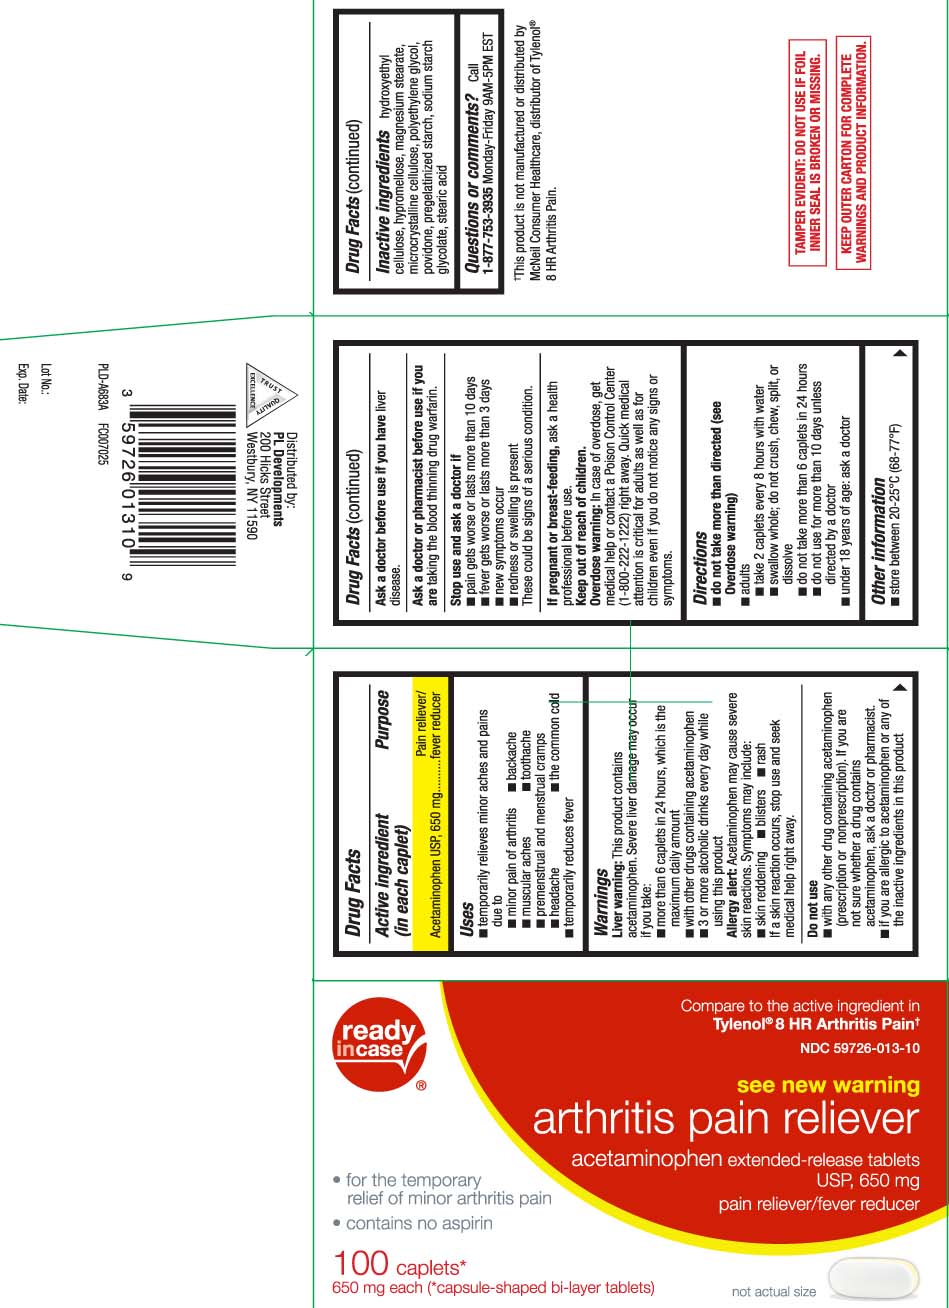 Acetaminophen USP, 650 mg